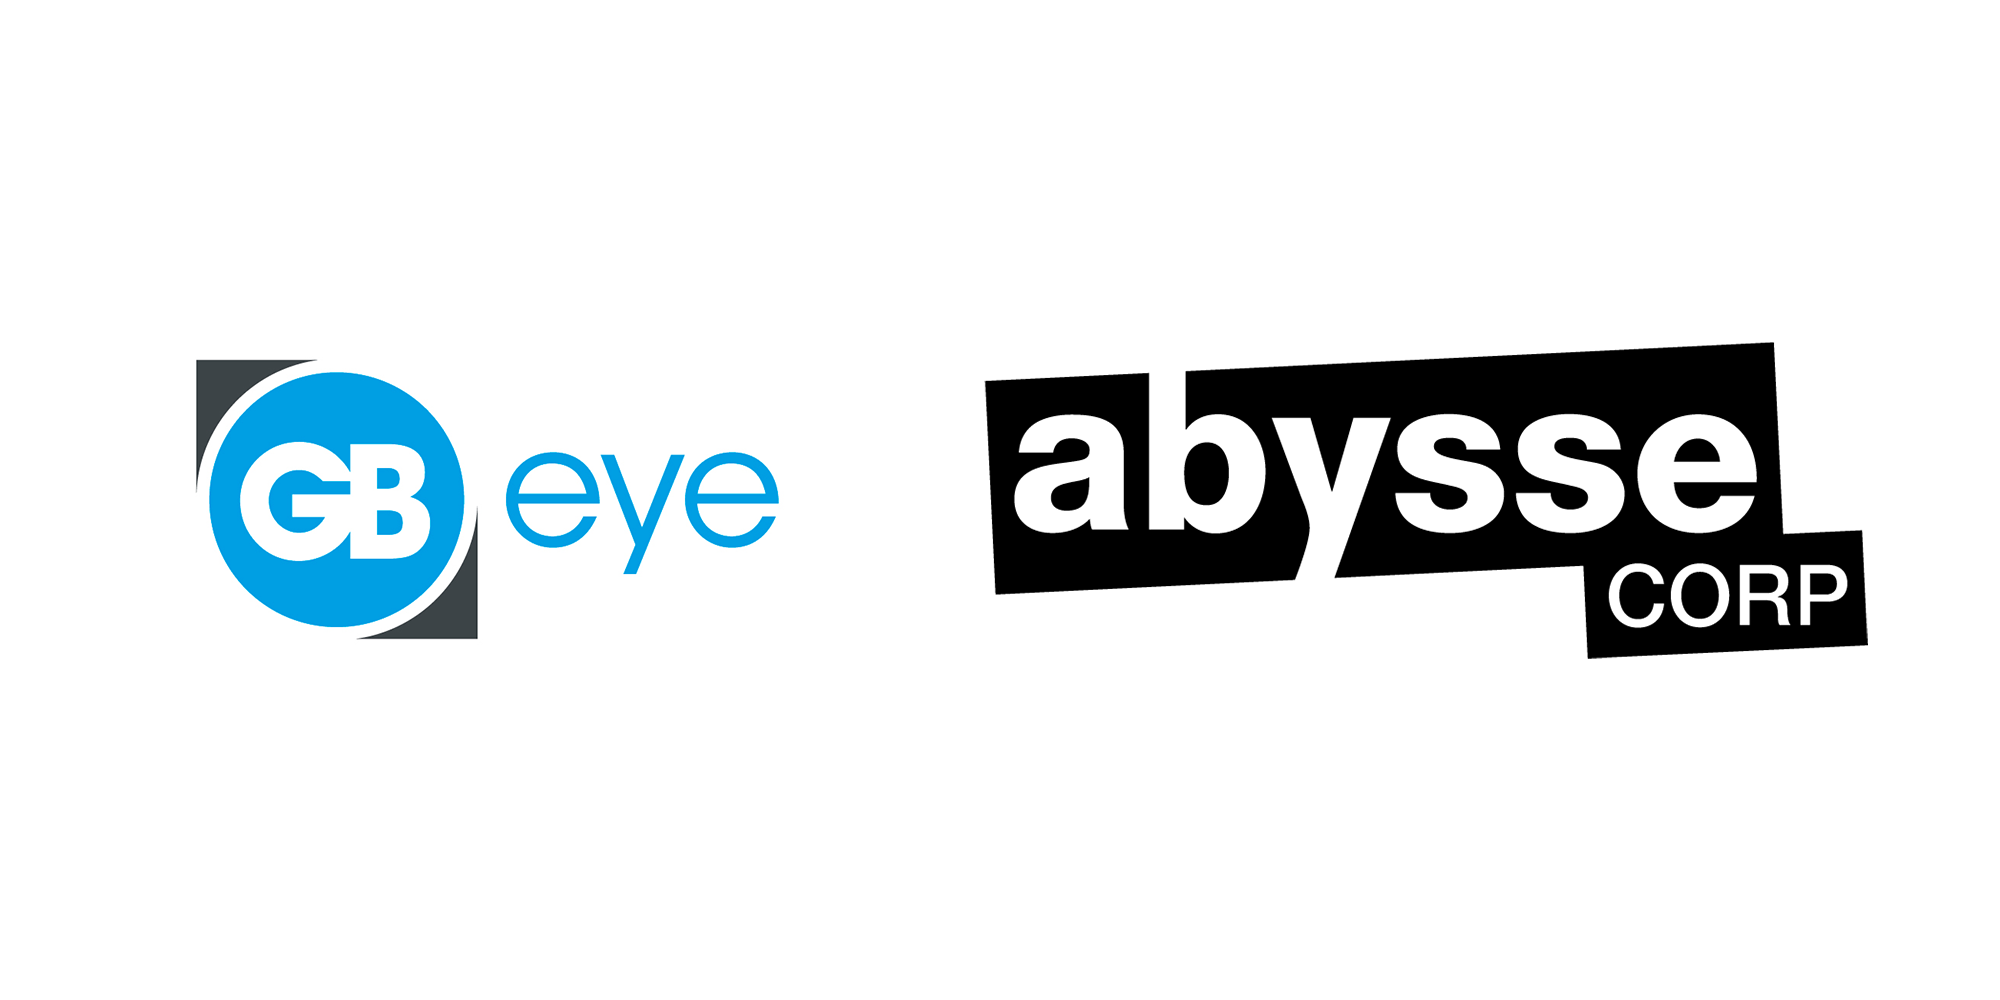 Abysse Corp - GB Eye